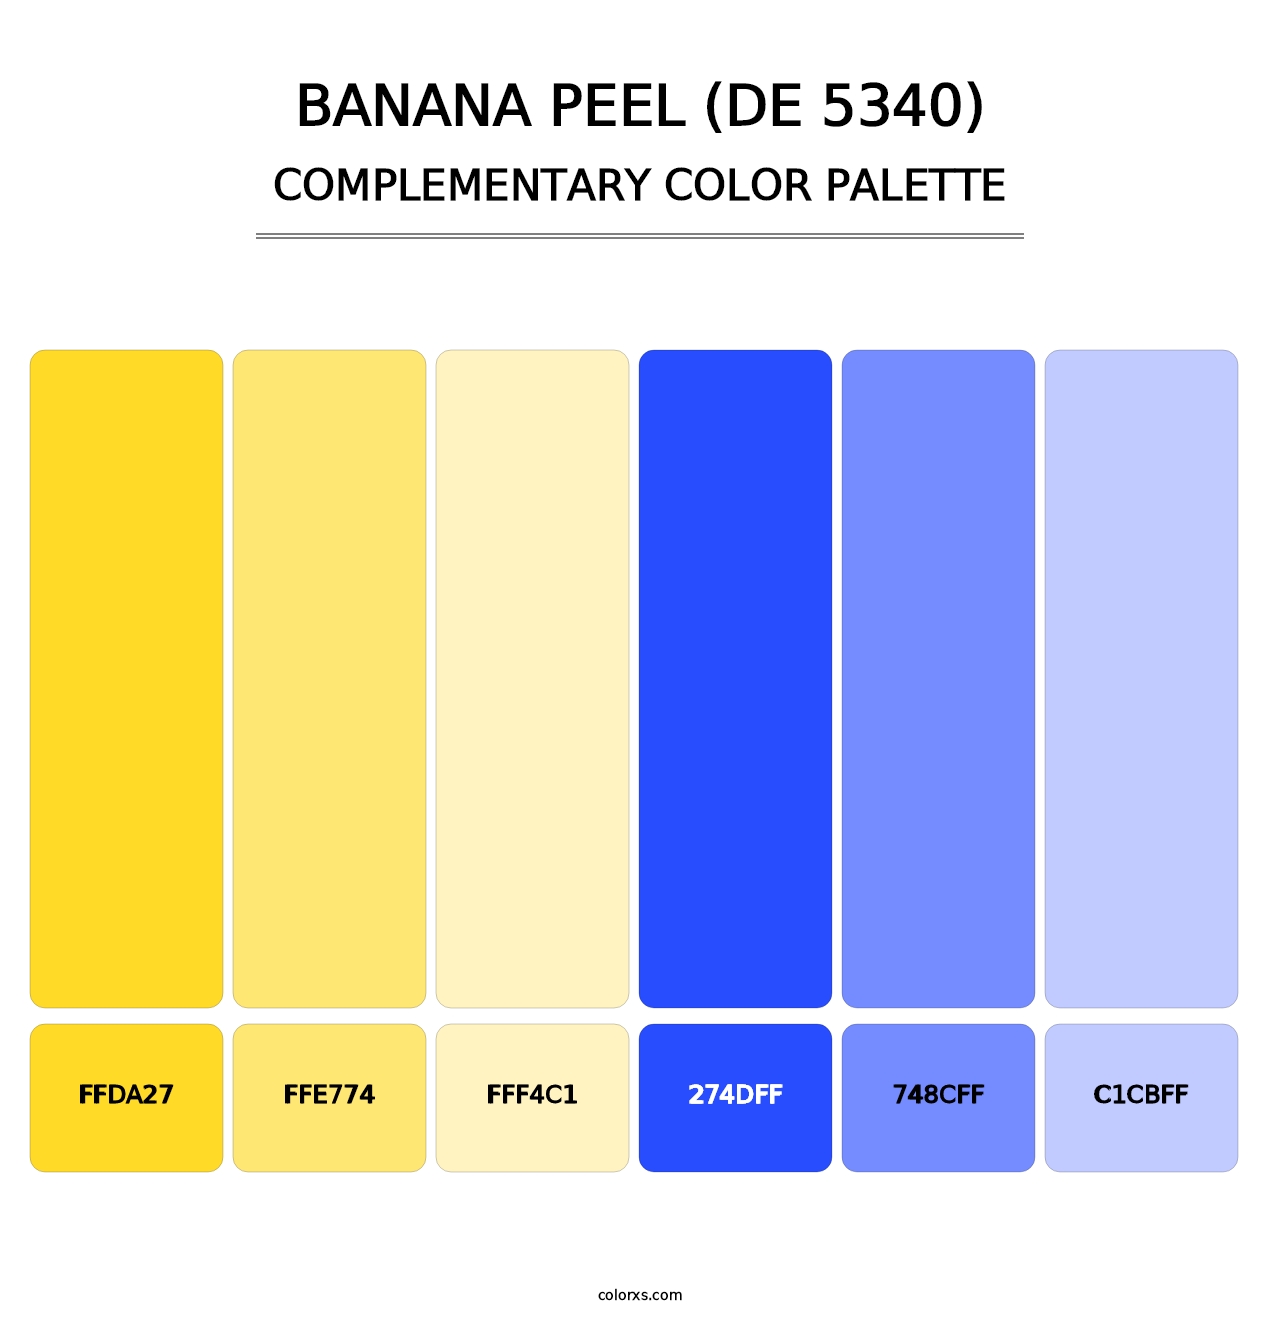 Banana Peel (DE 5340) - Complementary Color Palette